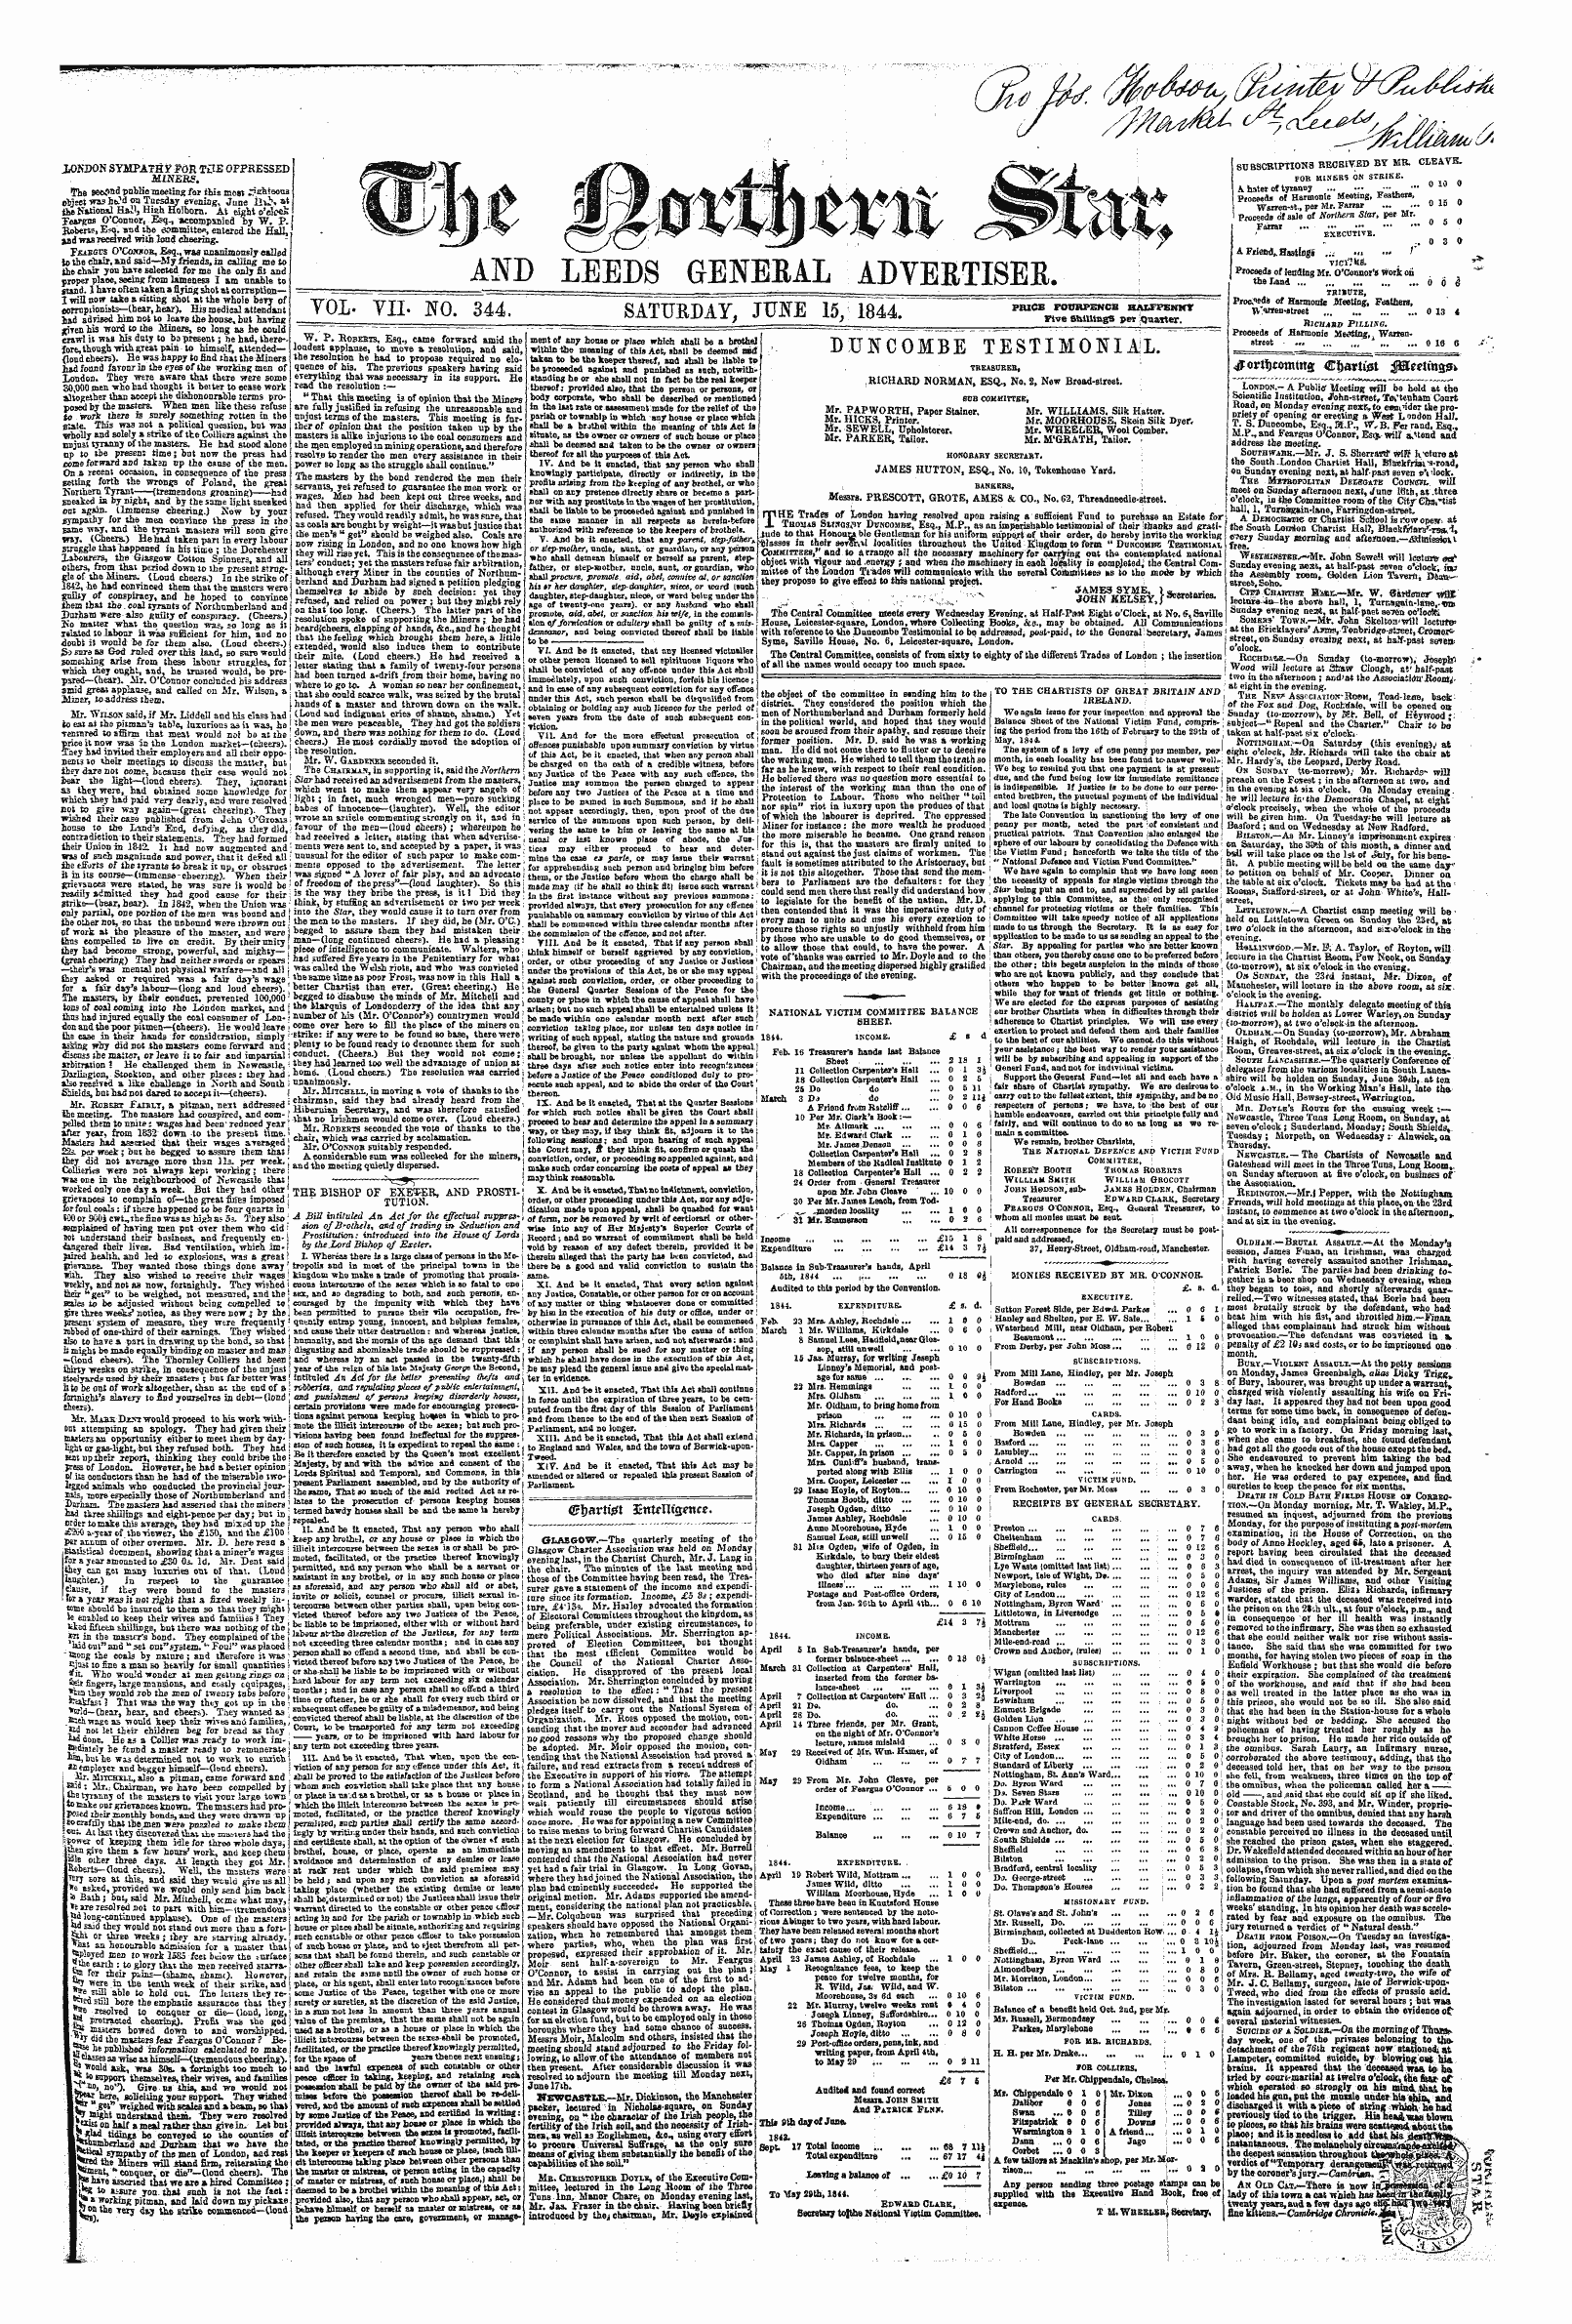 Northern Star (1837-1852): jS F Y, 1st edition - Crljartiieft Sntenfcptttt.